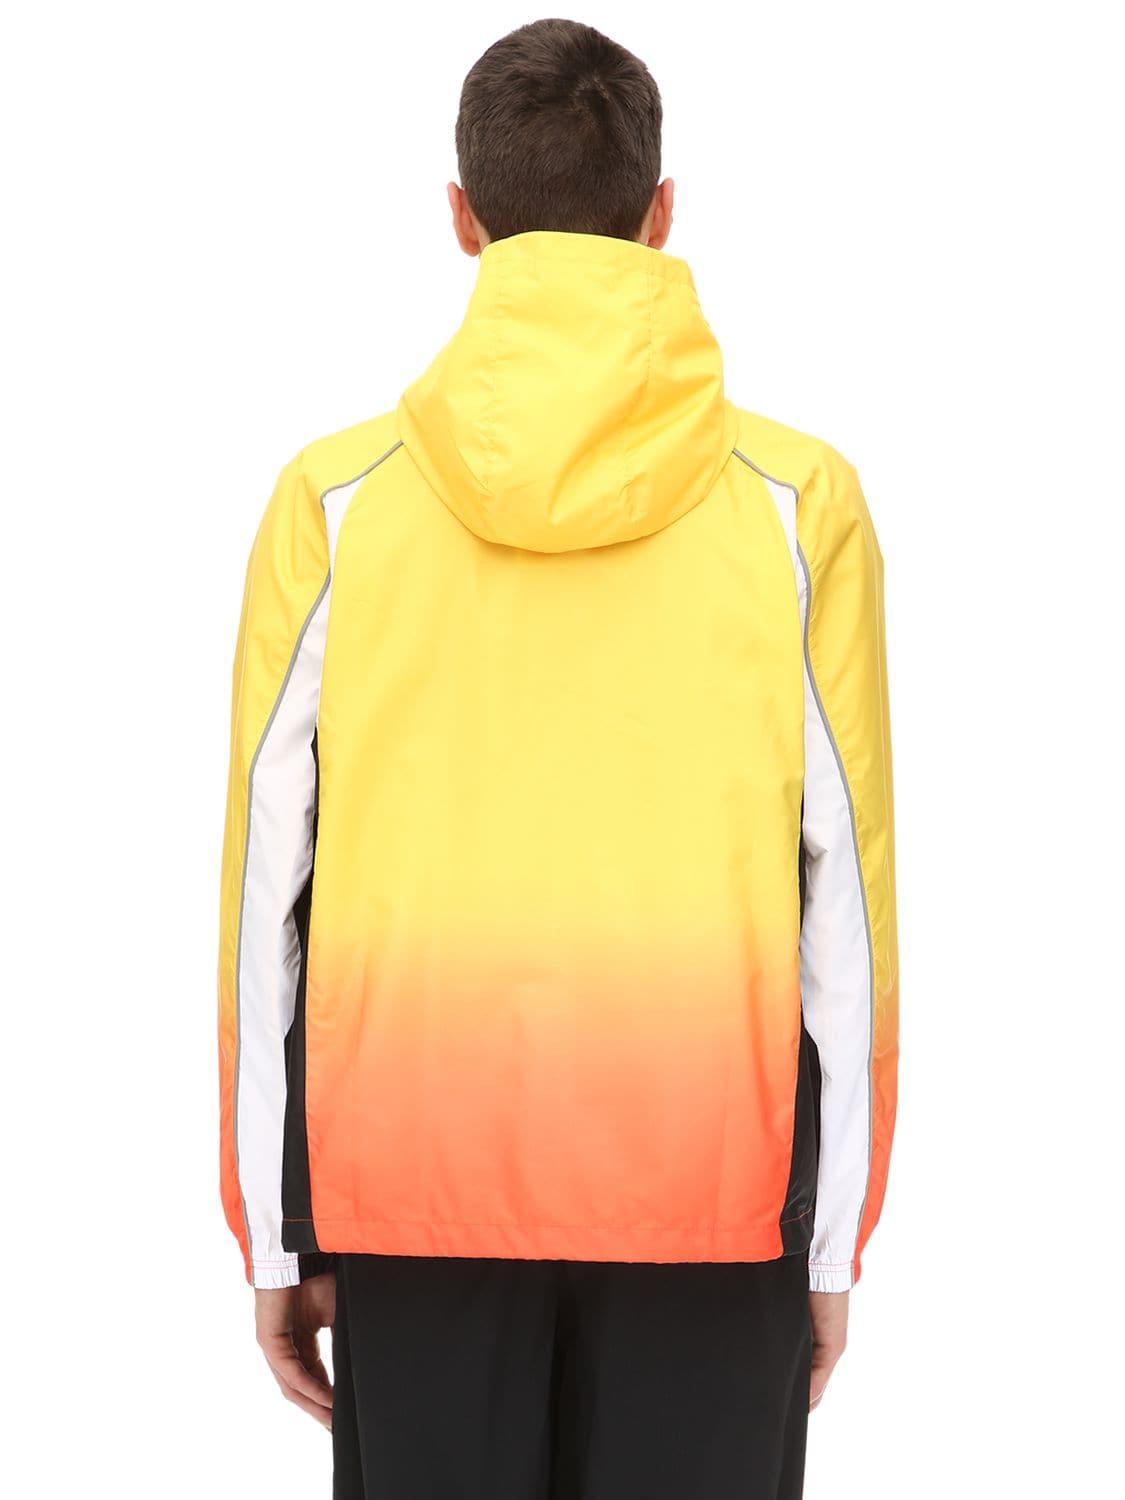 Nike M Nrg Tn Track Jkt Hd Nylon Jacket in Yellow for Men